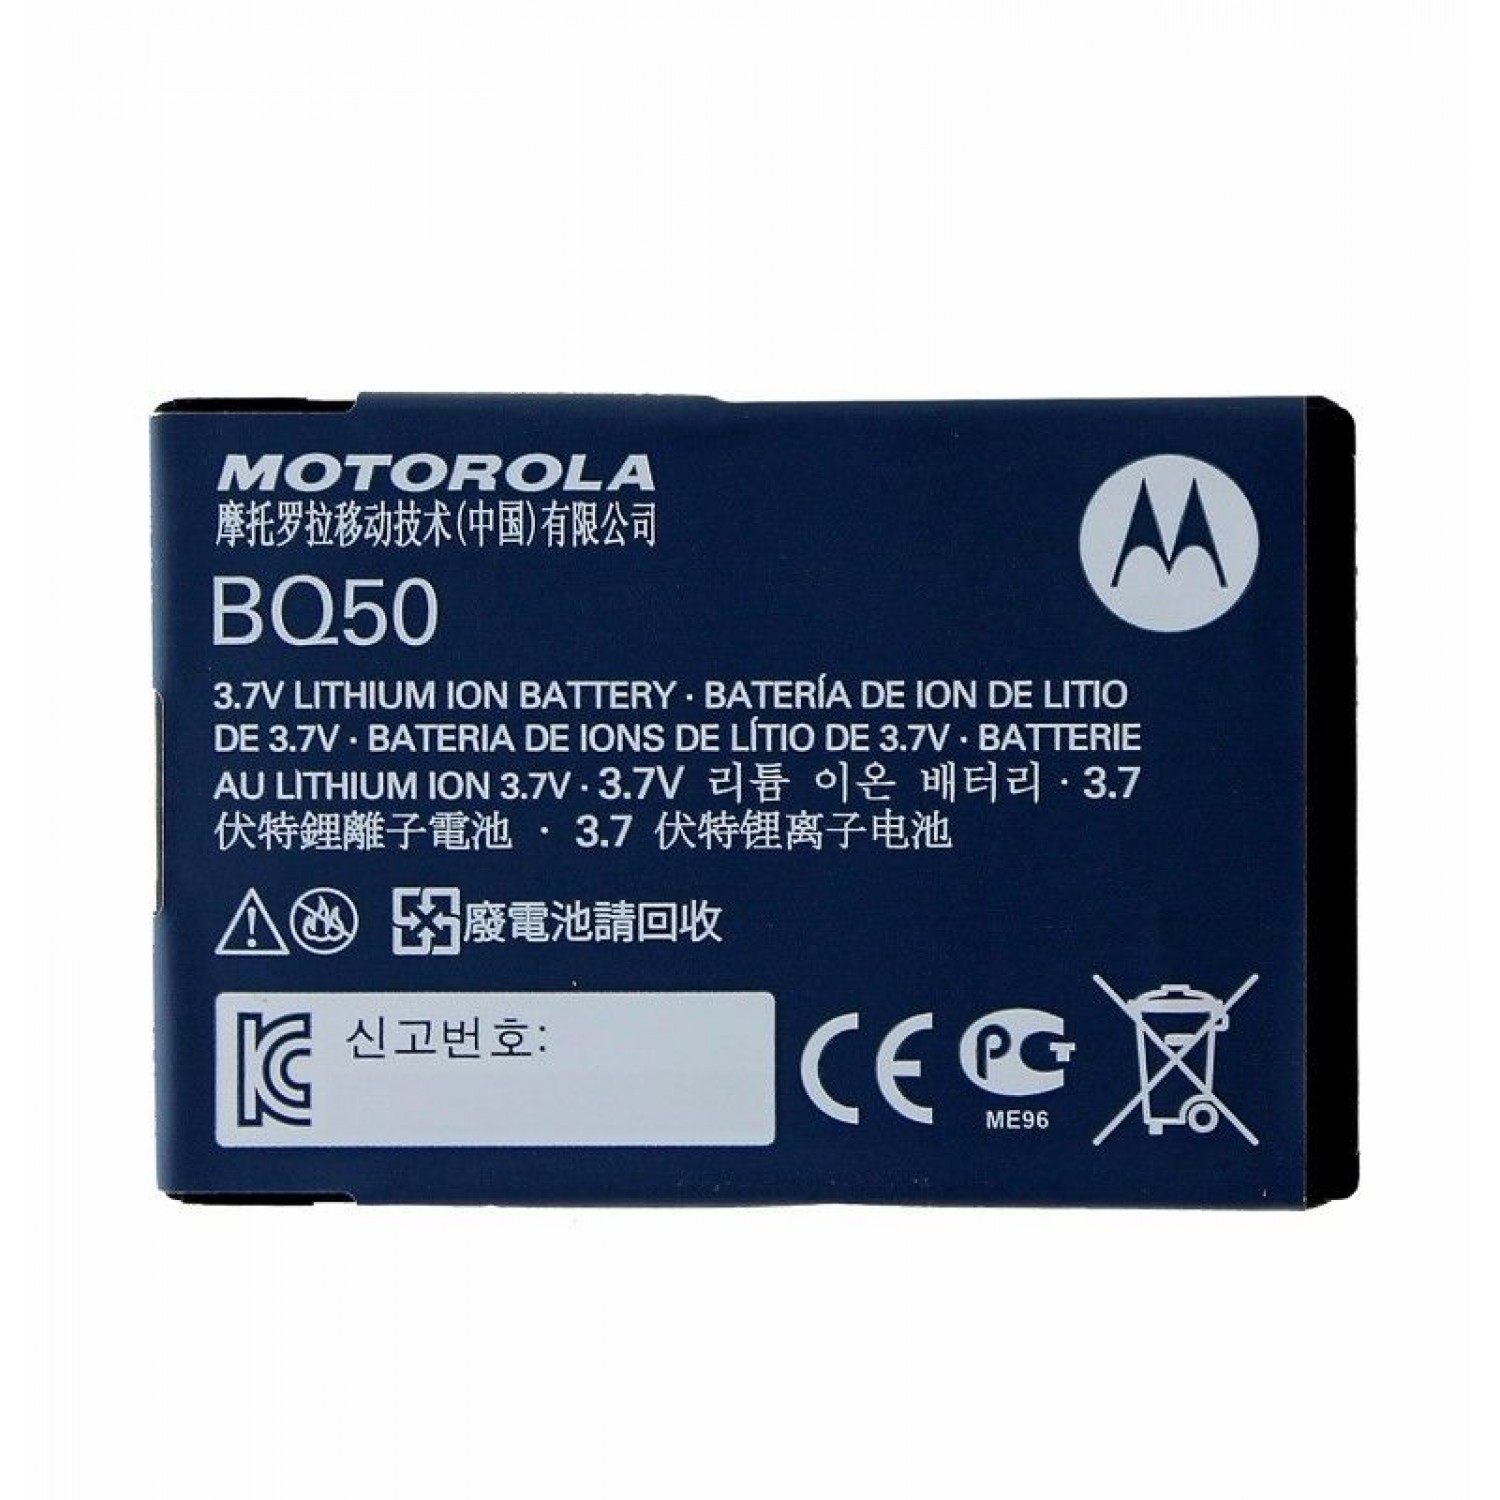 Battery 50. Bc50 аккумулятор Motorola. Моторола v50 аккумулятор. Motorola w270 аккумулятор. Батарейка br50 Motorola.